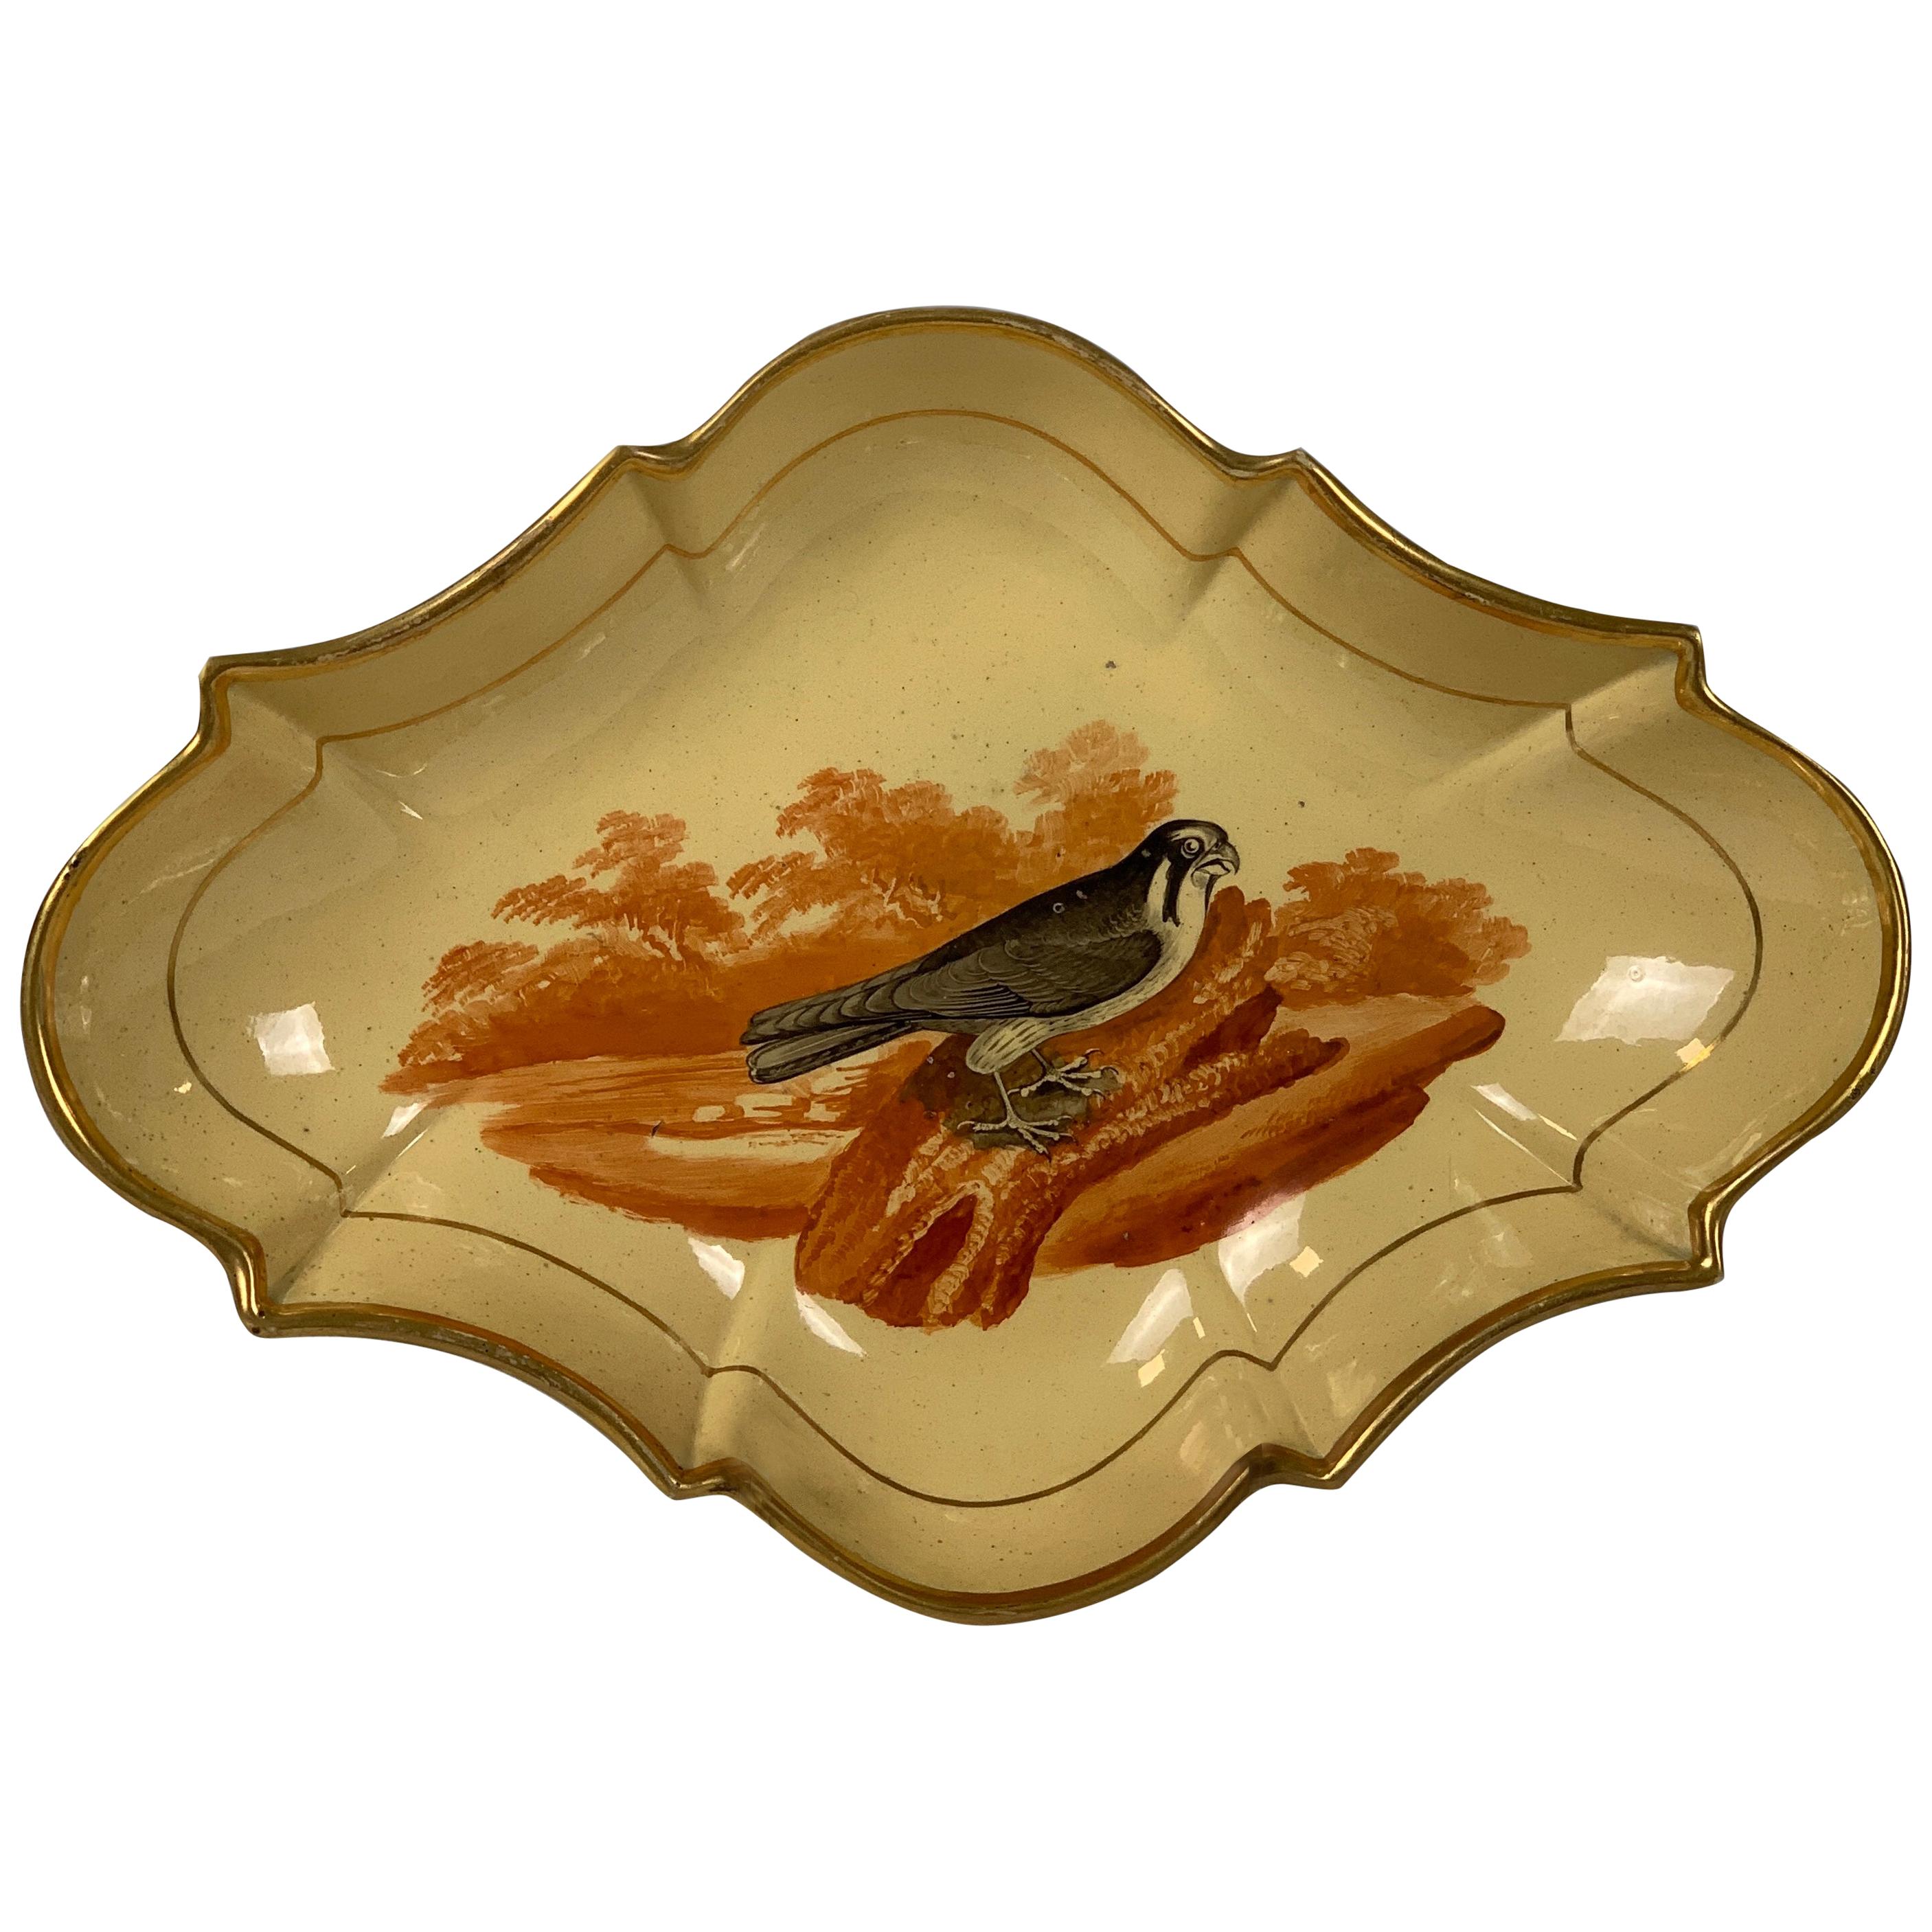 Antique Drabware Dish Showing Bird Made by Job Ridgway 1802-1808